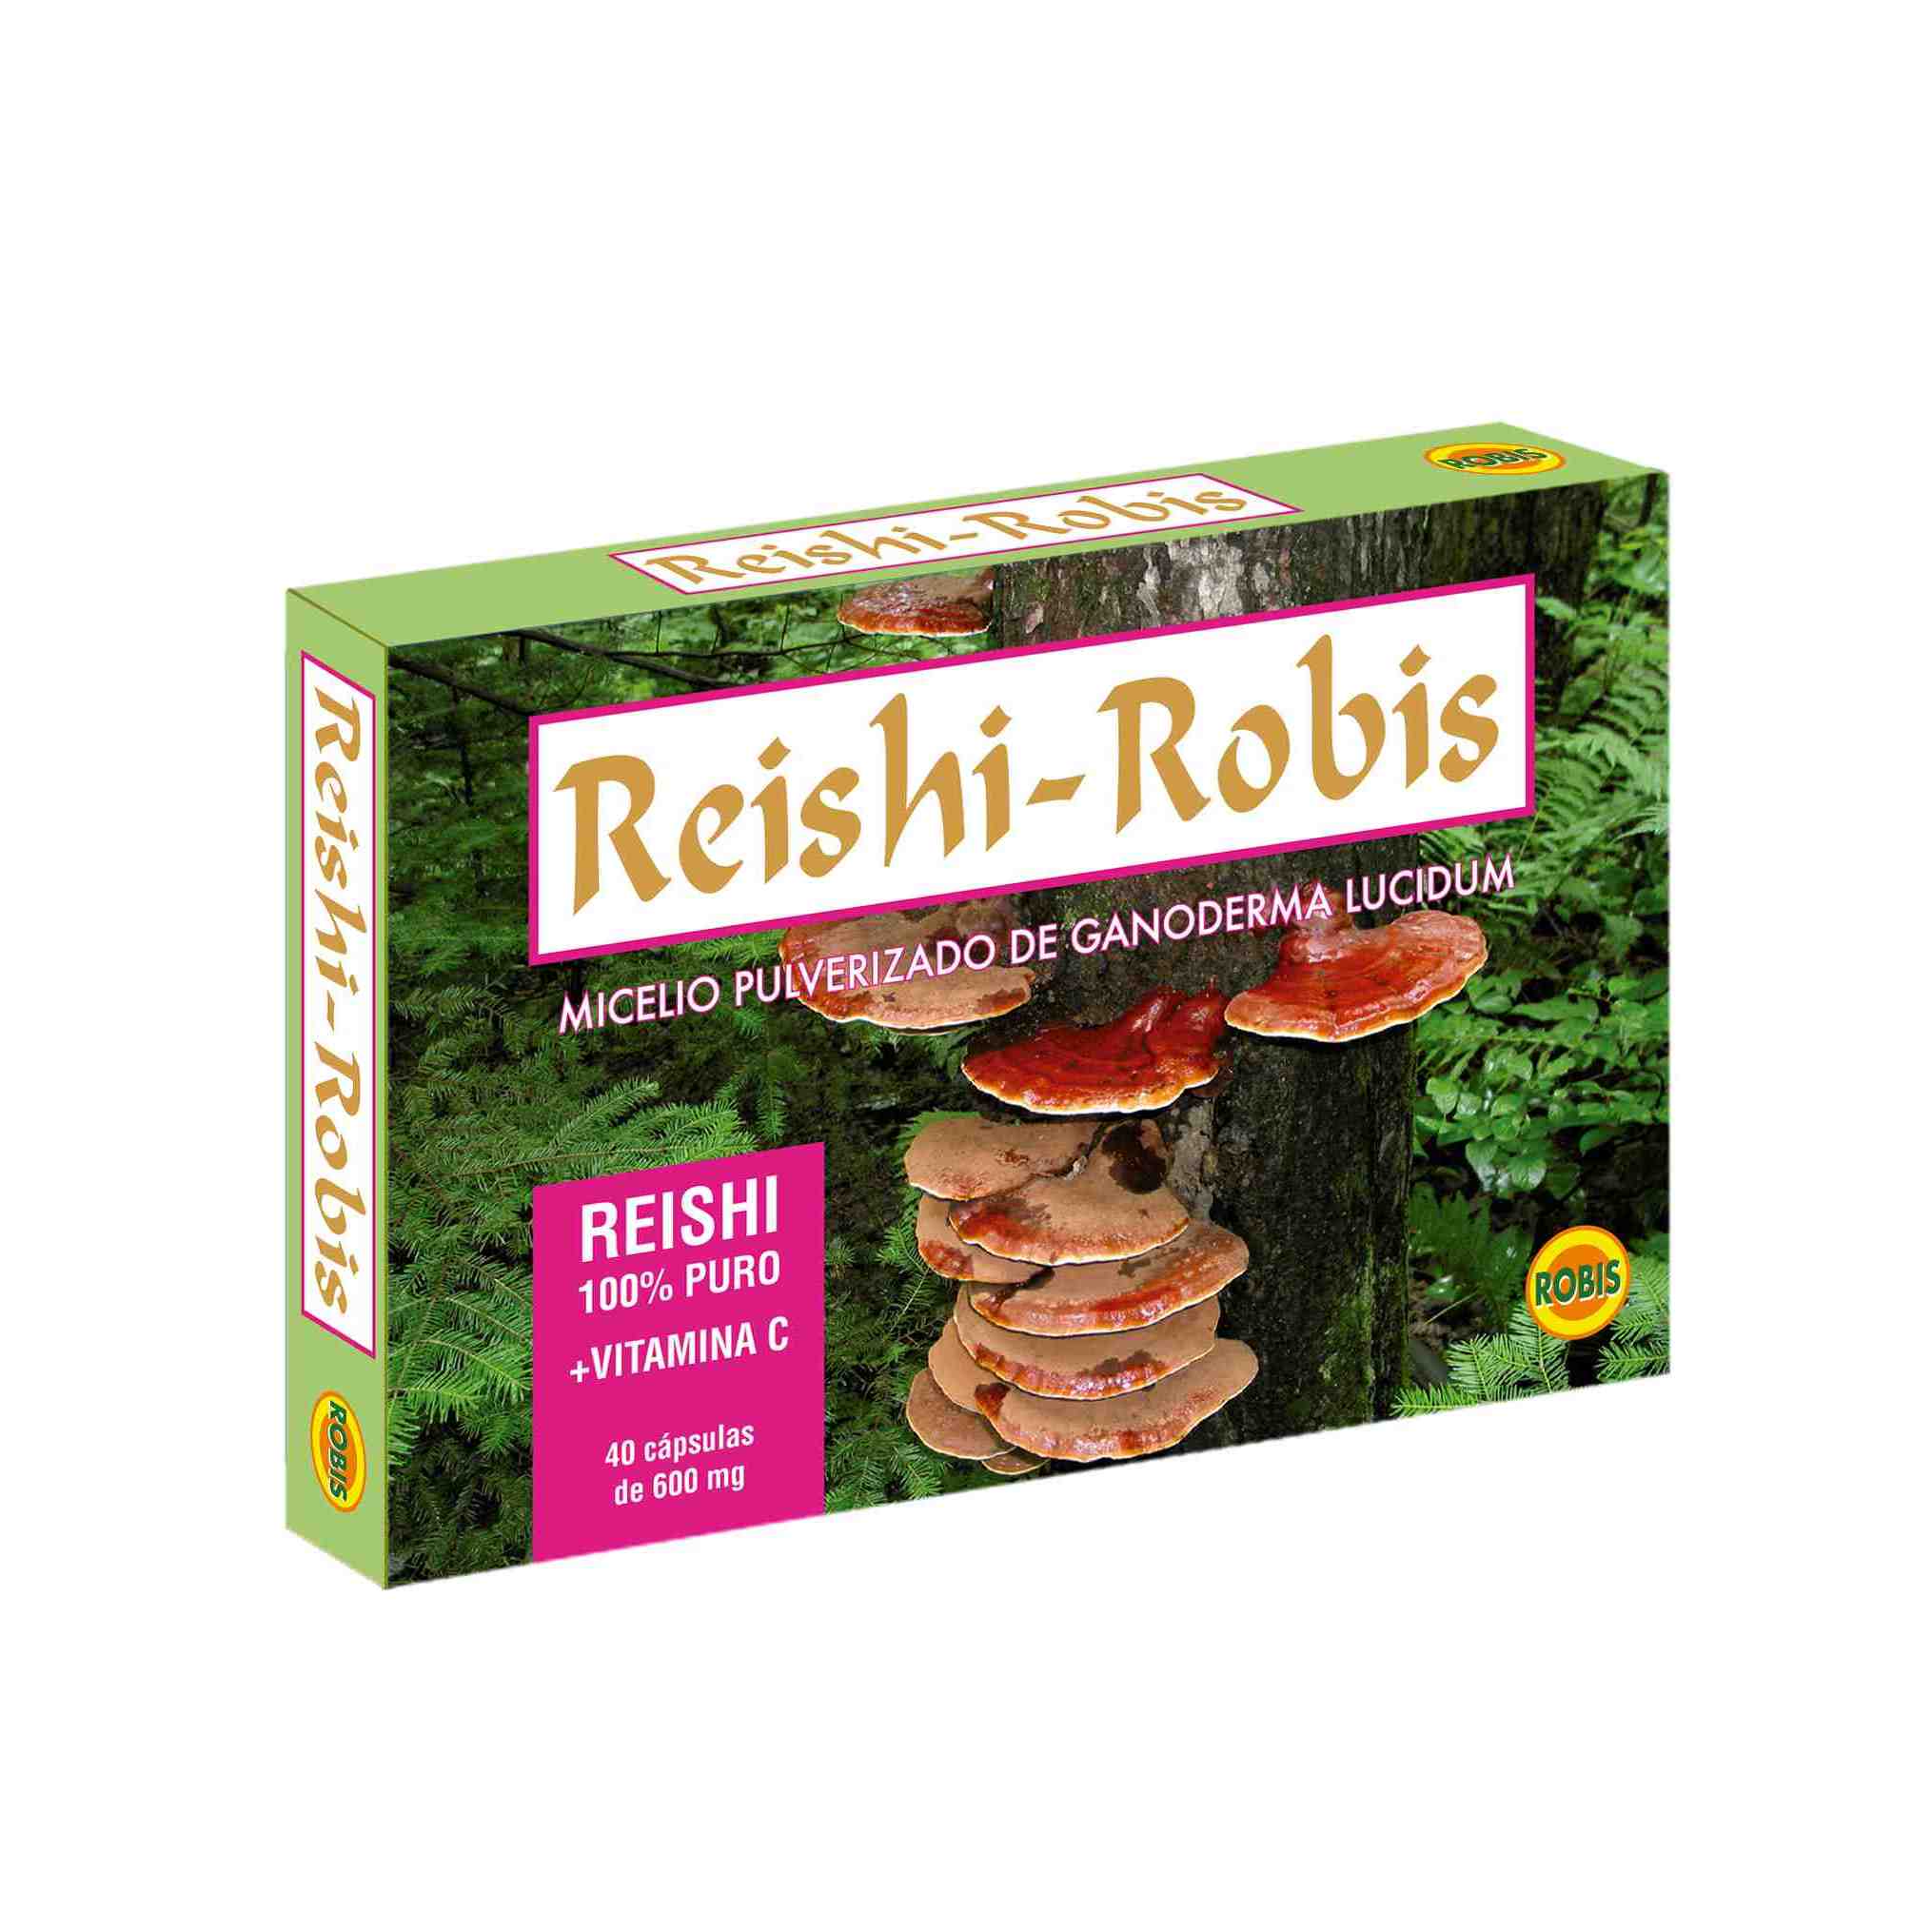 Reishi-Robis